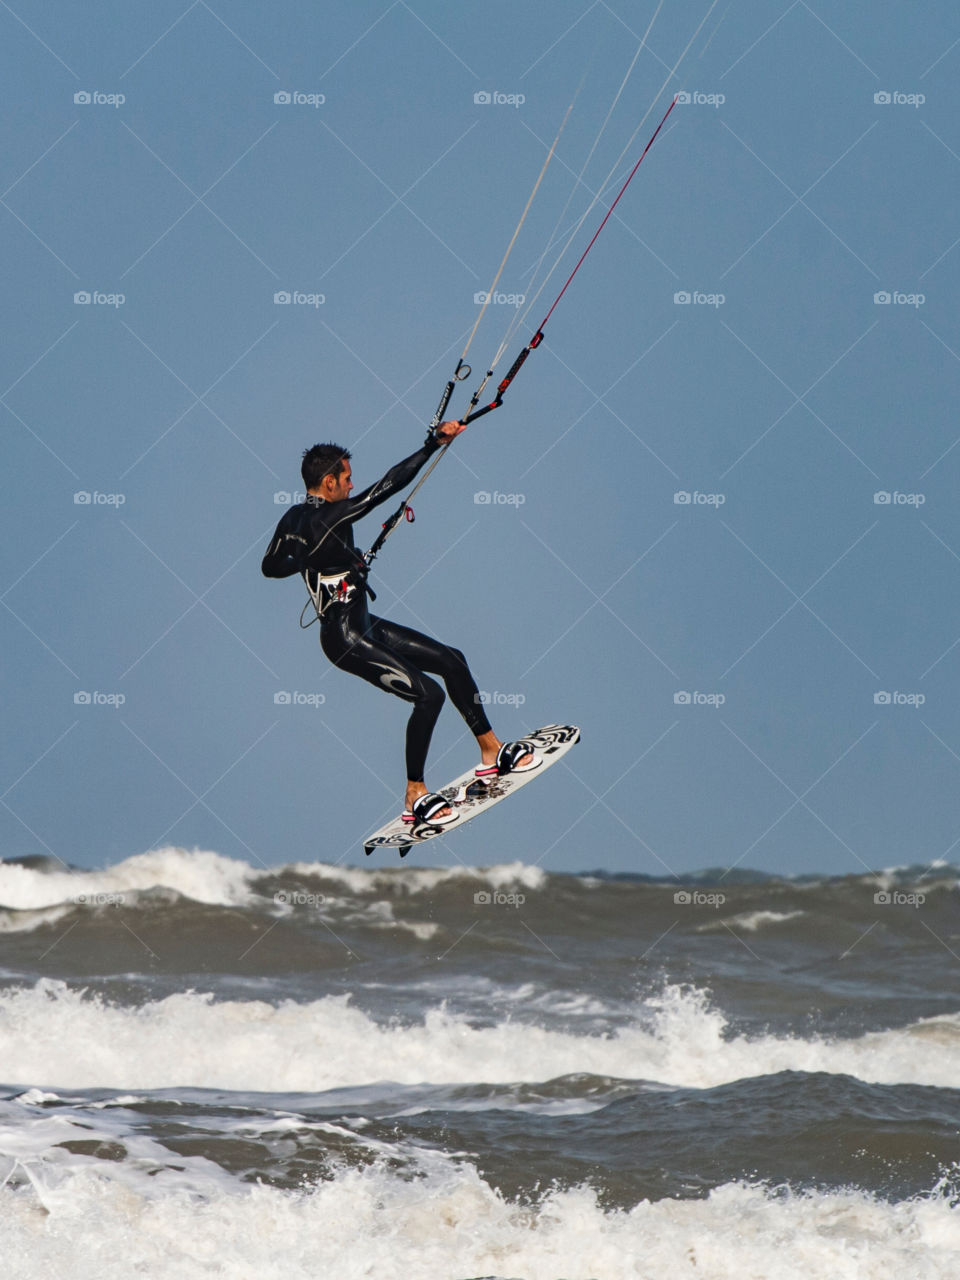 Kite surfer jumping high